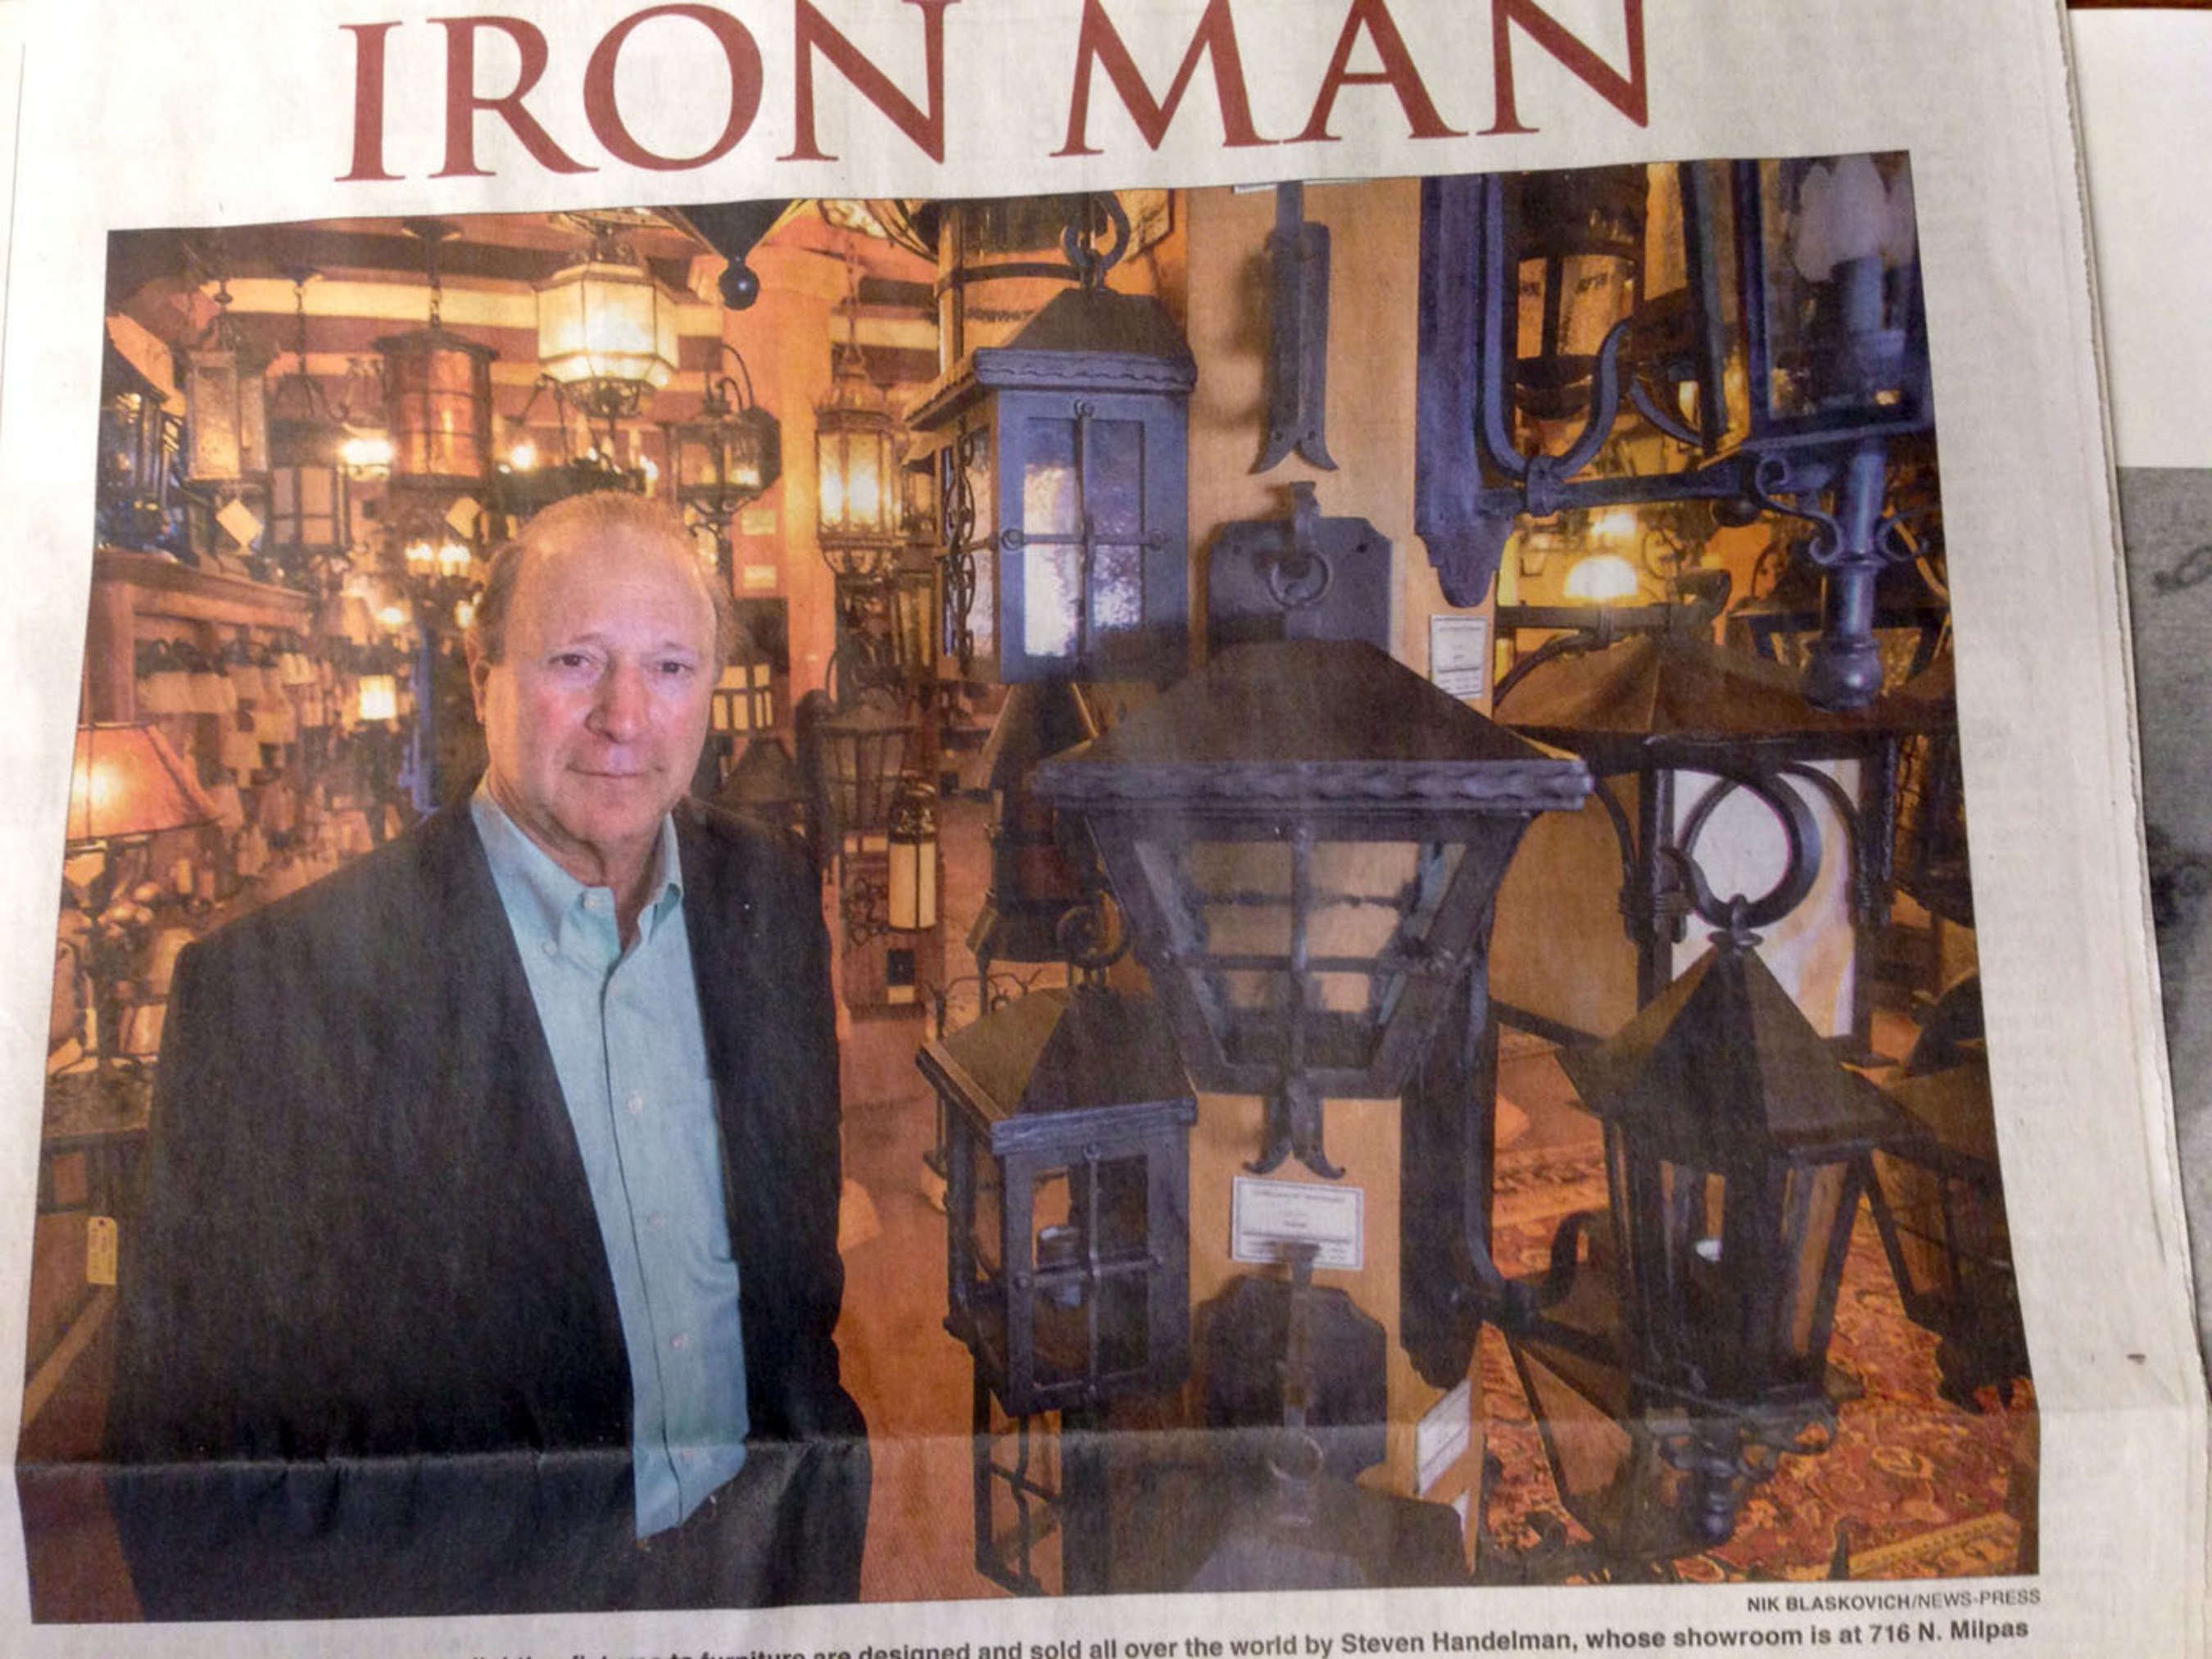 Steven Handelman from Steven Handelman Studios produces internationally top quality wrought iron products; making him a true Iron Man. (PRNewsFoto/Steven Handelman Studios) (PRNewsFoto/STEVEN HANDELMAN STUDIOS)